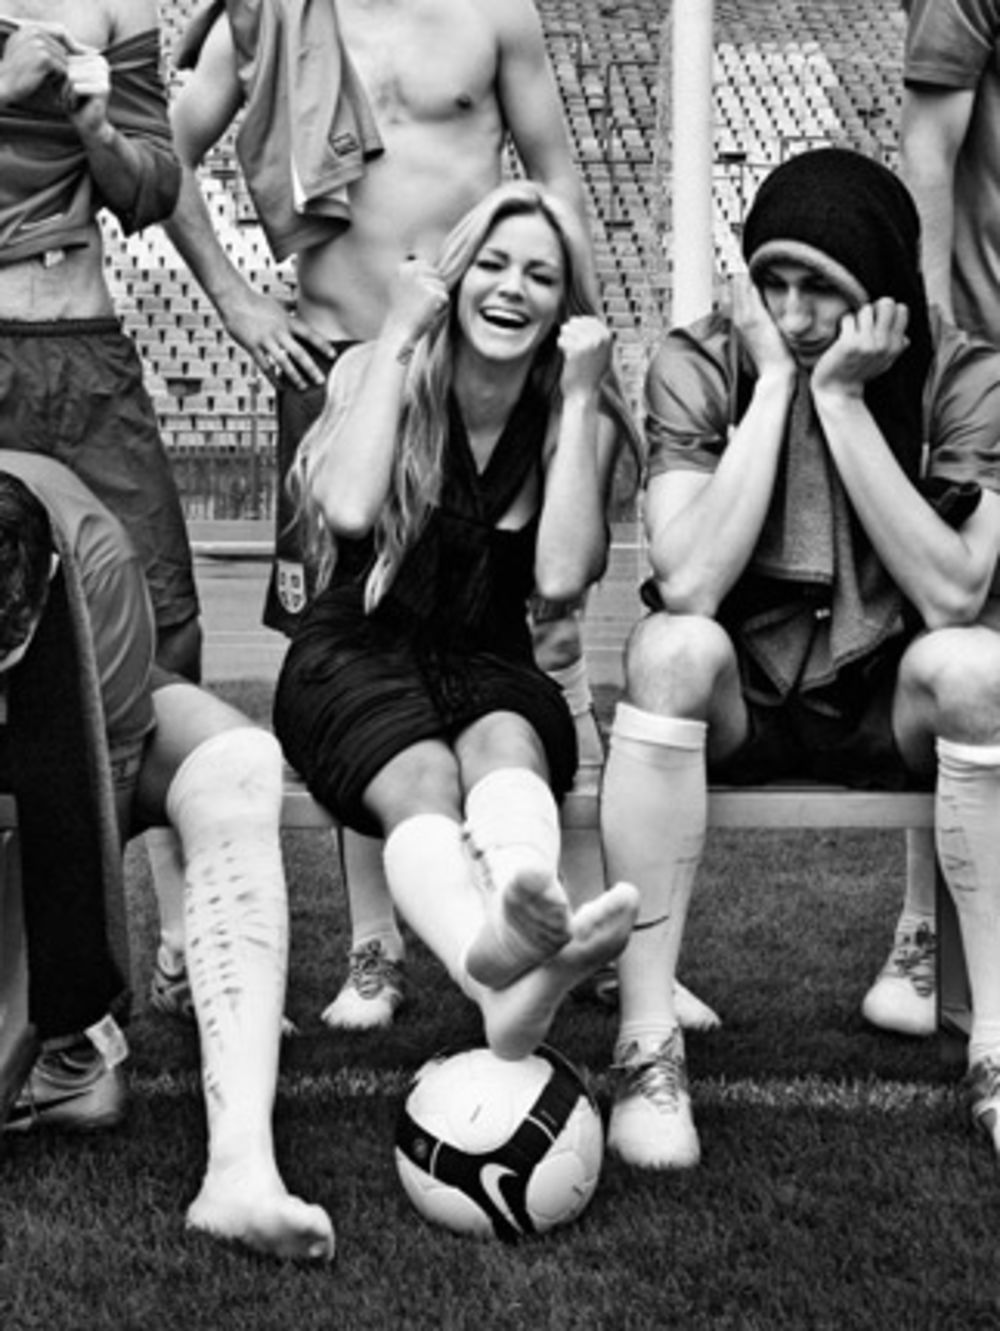 Tri nedelje pre Svetskog fudbalskog prvenstva, pop zvezda Nataša Bekvalac u Storyjevom modnom fotosešnu nakratko je mikrofon zamenila kopačkama i oprobala se kao trener petorice srpskih reprezentativaca